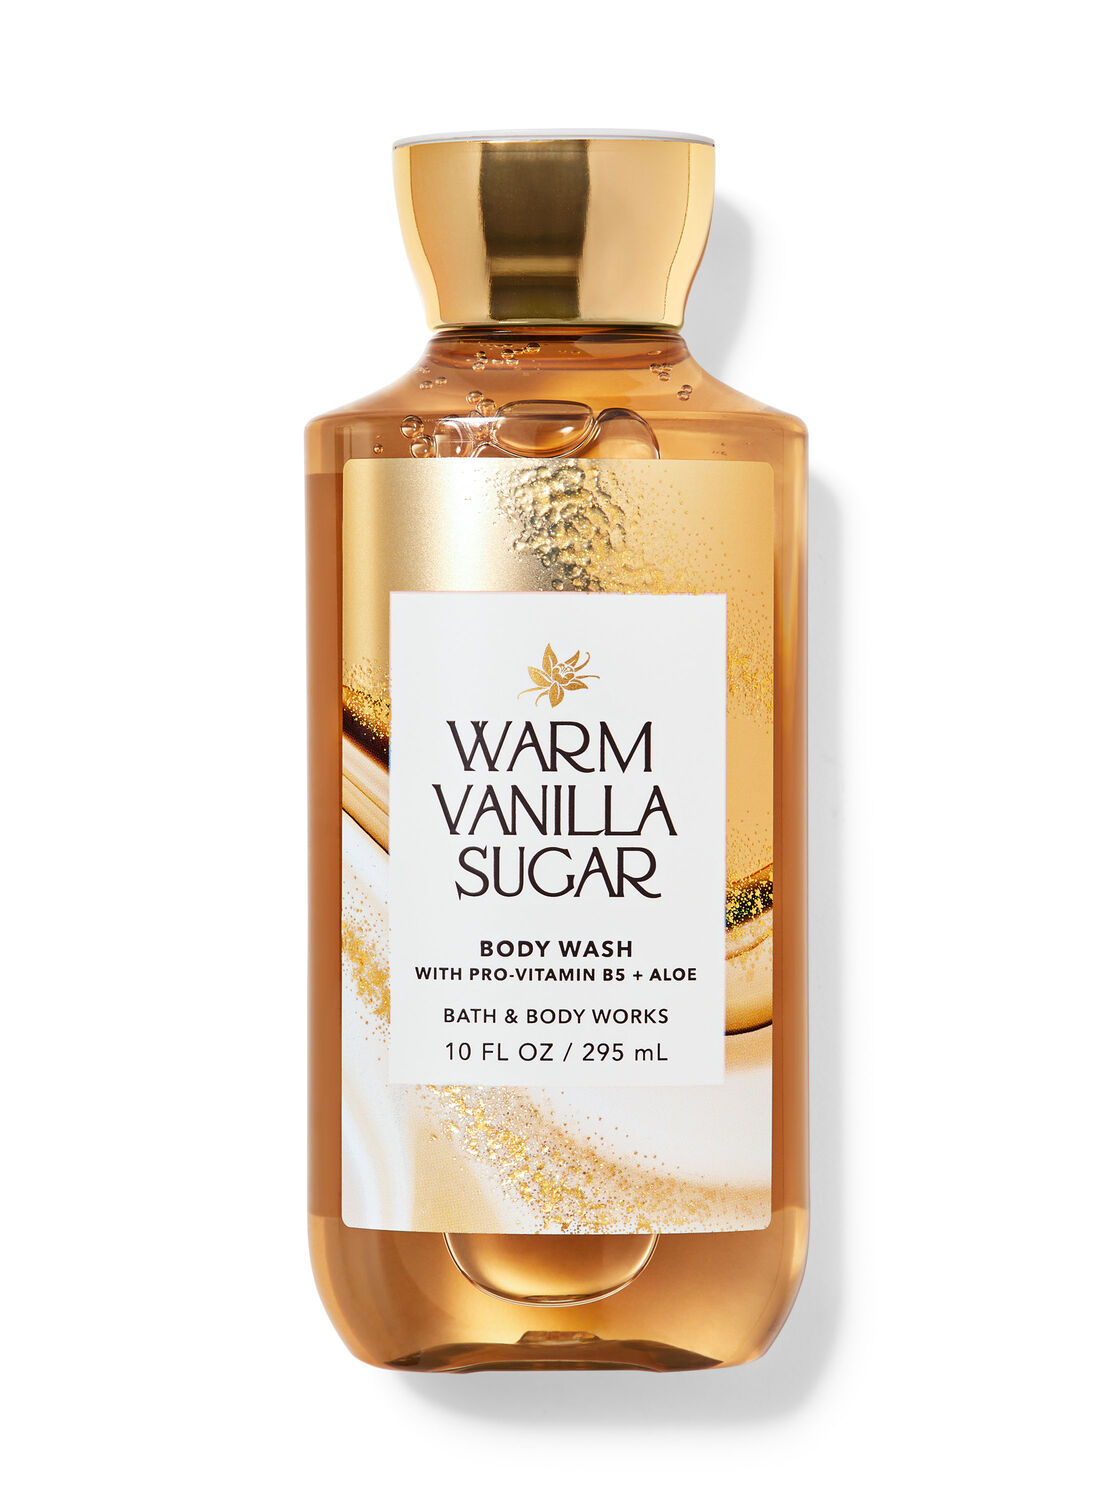 Vanilla Sugar Scent  Warm Vanilla Sugar Inspired by Bath & Body